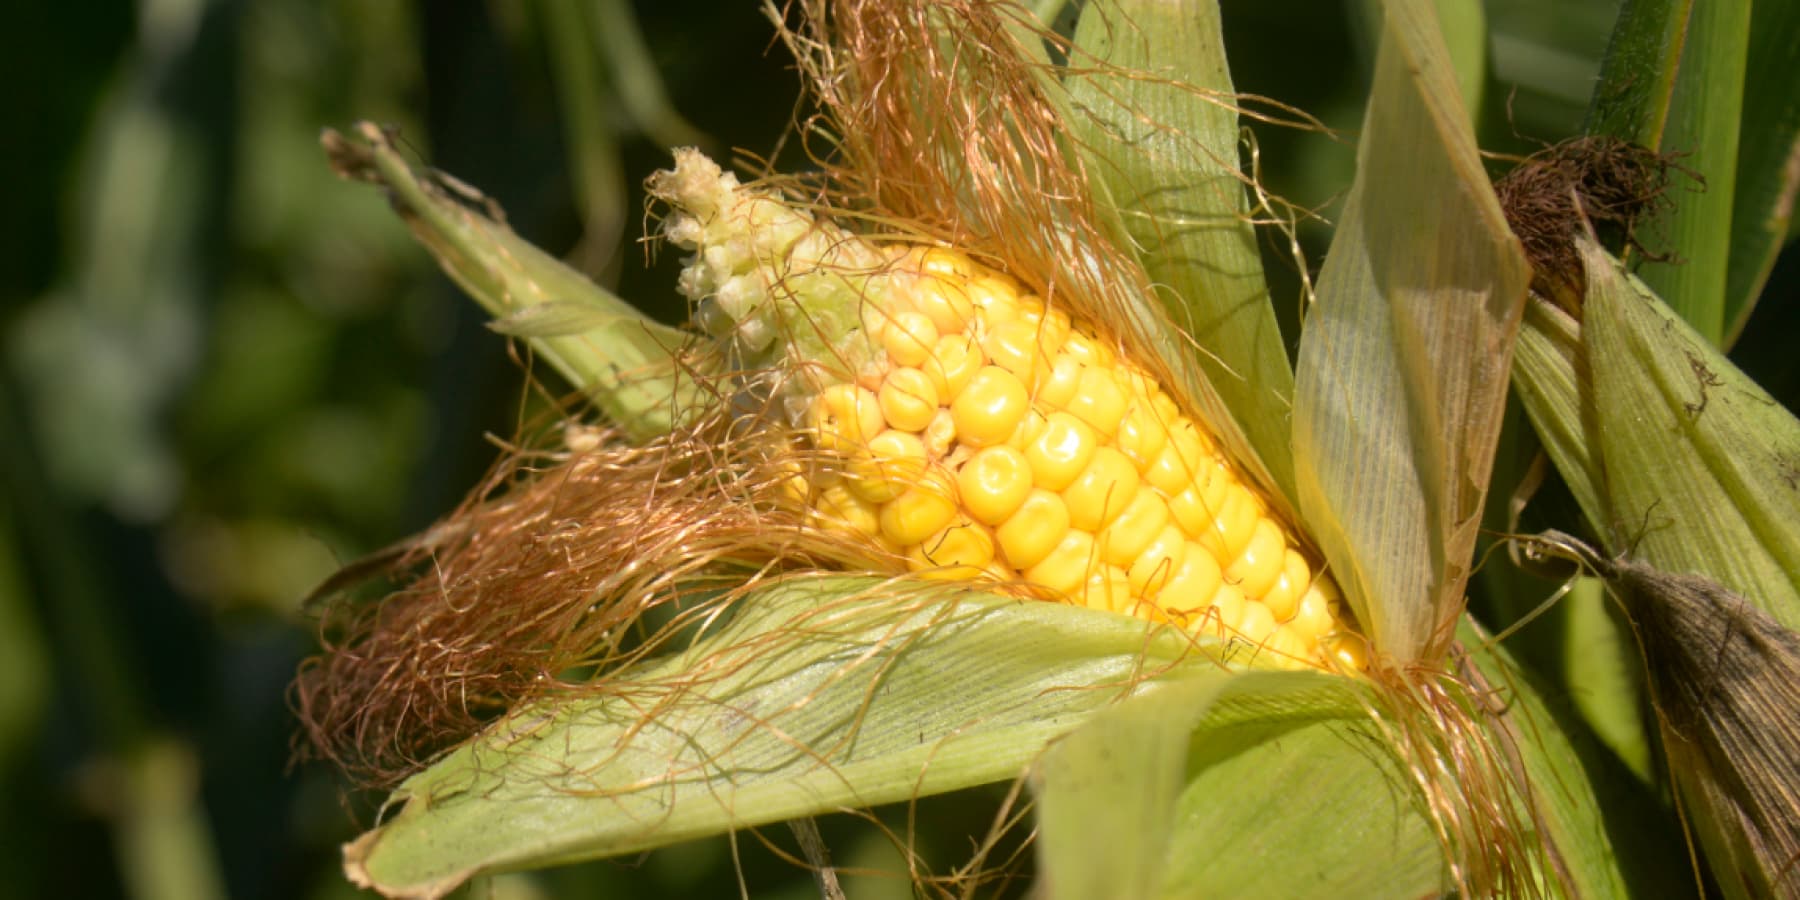 Close up image of corn on a stalk